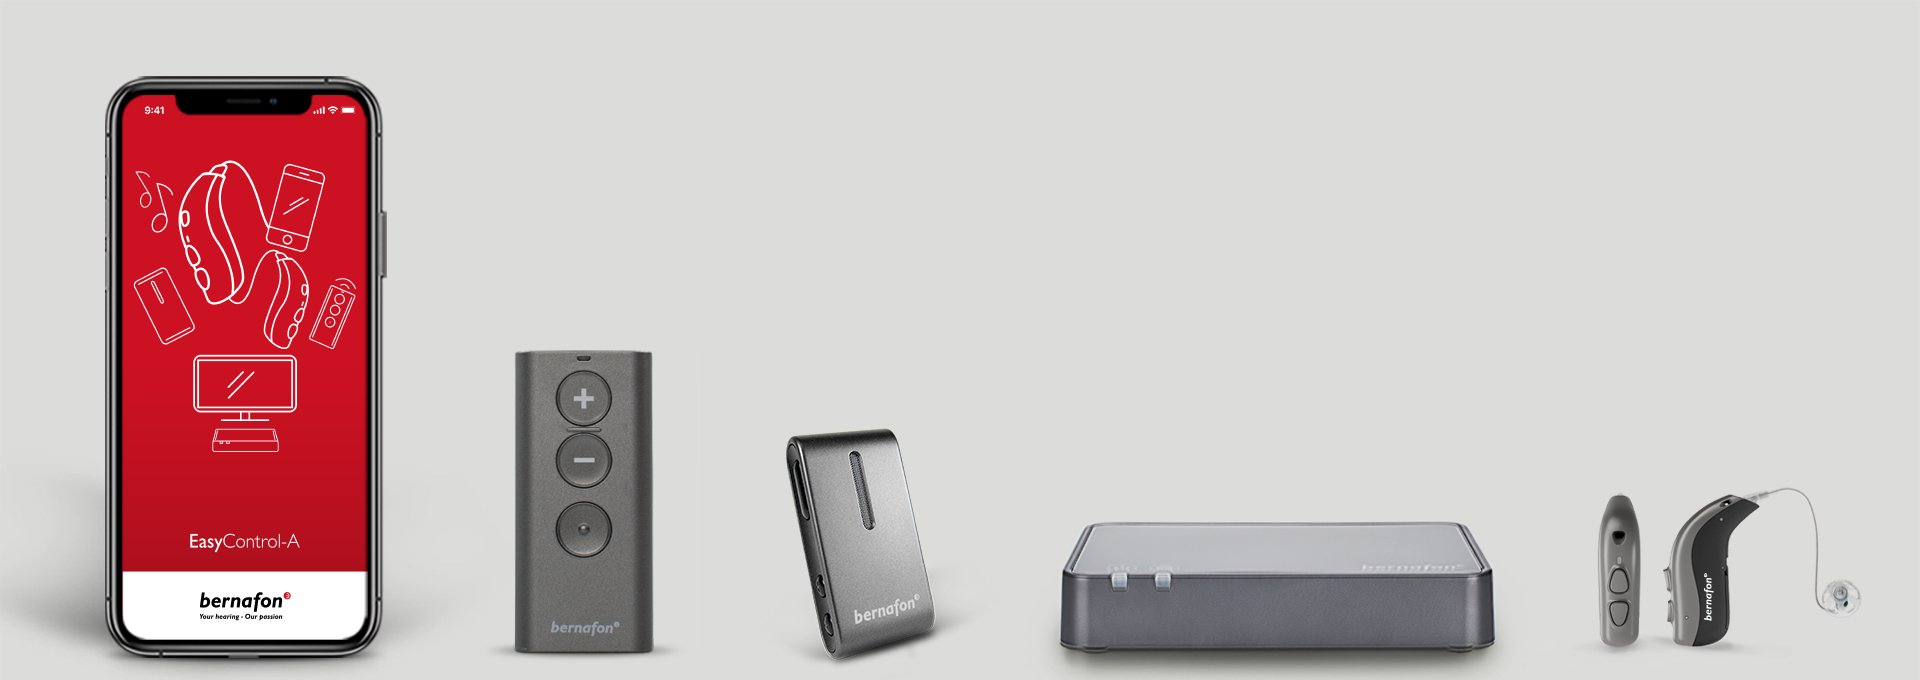 Bernafon accessories lined up, including Bernafon app on a smartphone, TV adapter, remote control, hearing aids and SoundClip-A